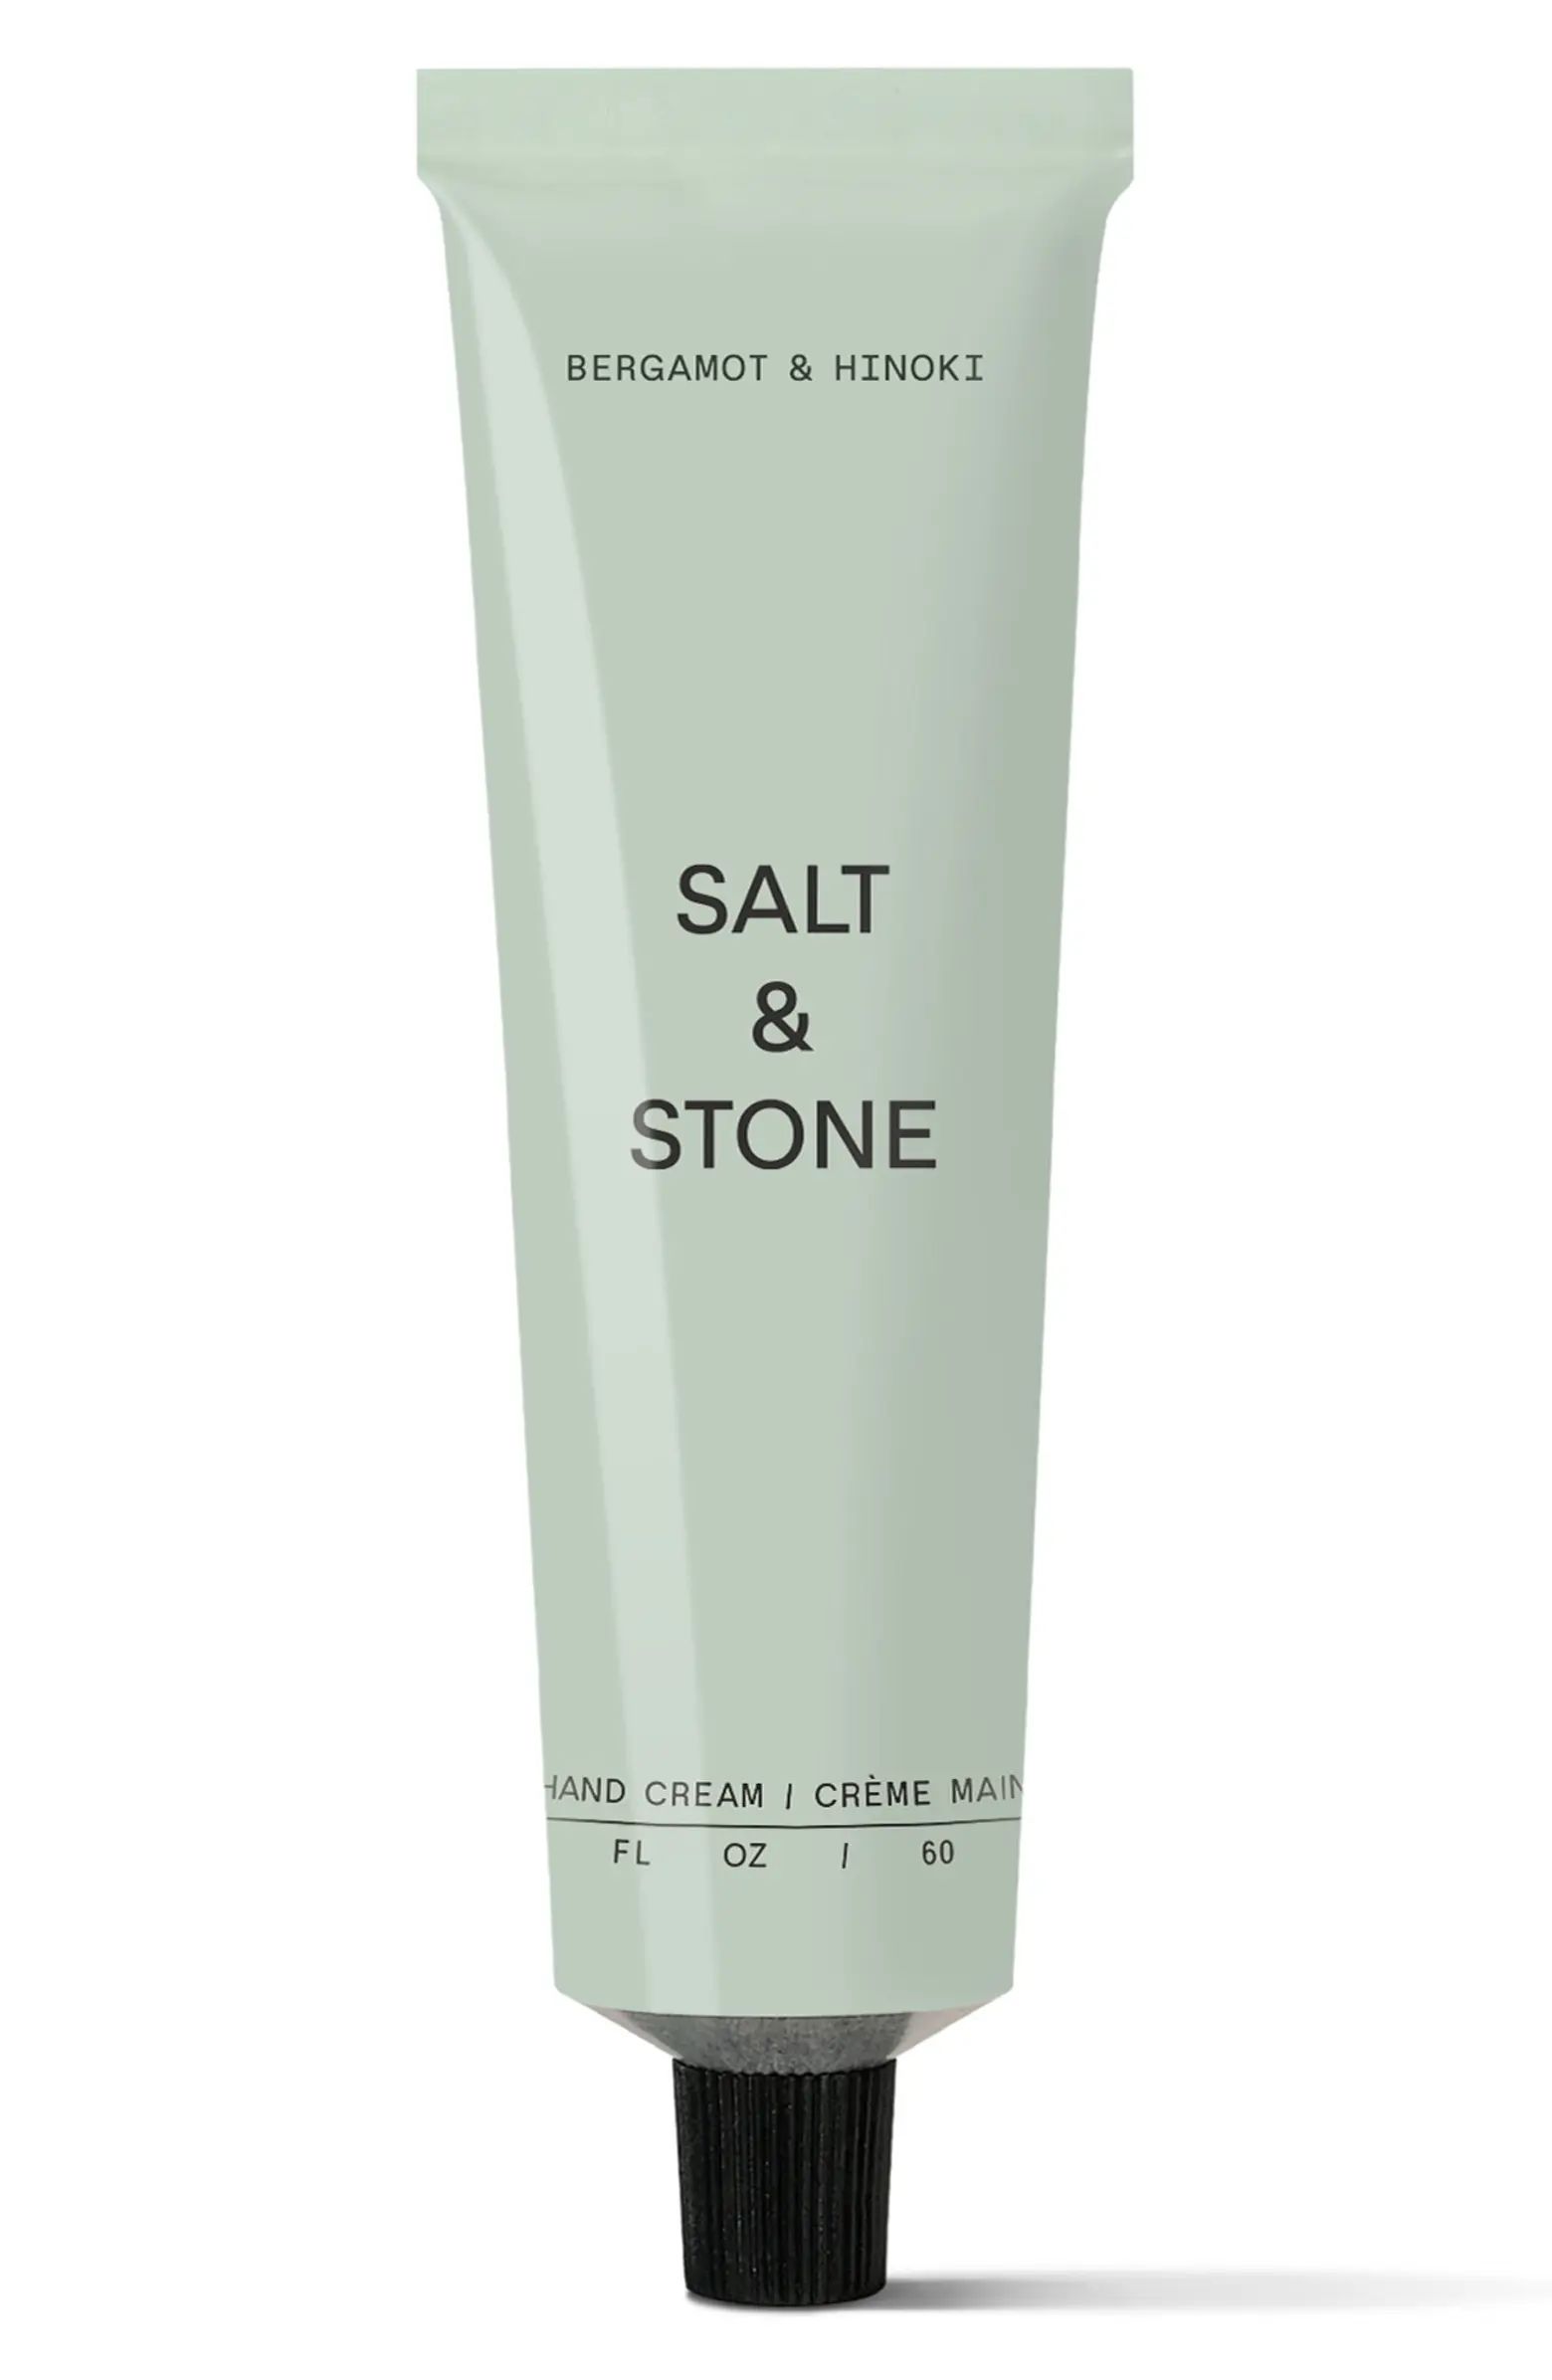 SALT & STONE Bergamot & Hinoki Hand Cream | Nordstrom | Nordstrom